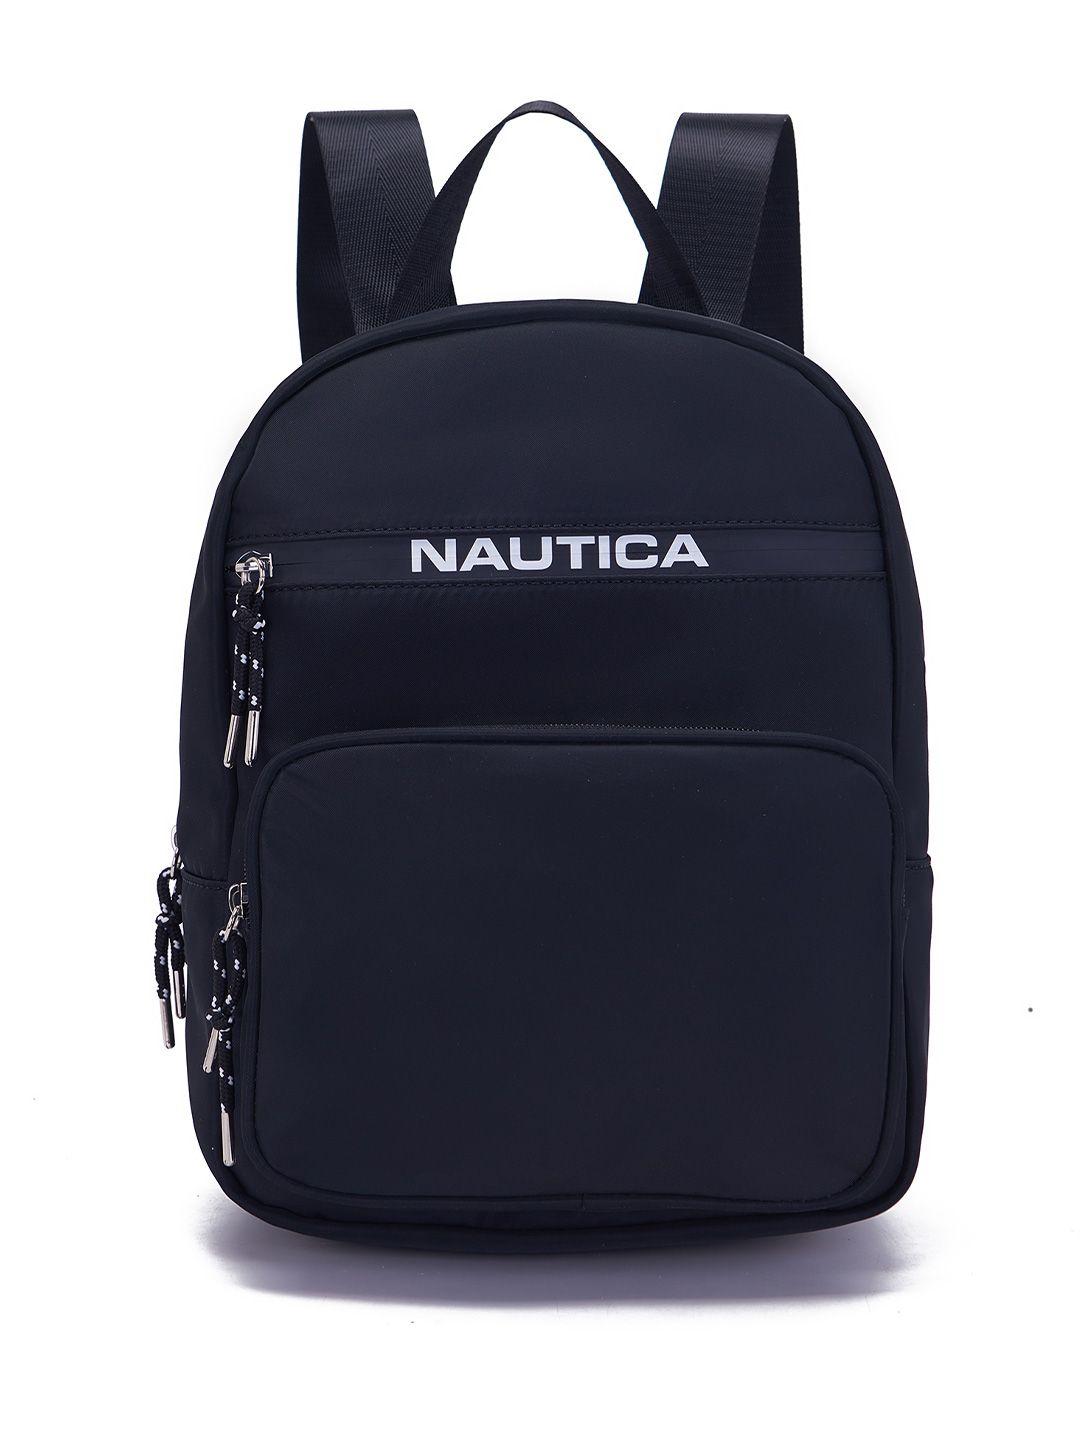 nautica printed ergonomic backpack